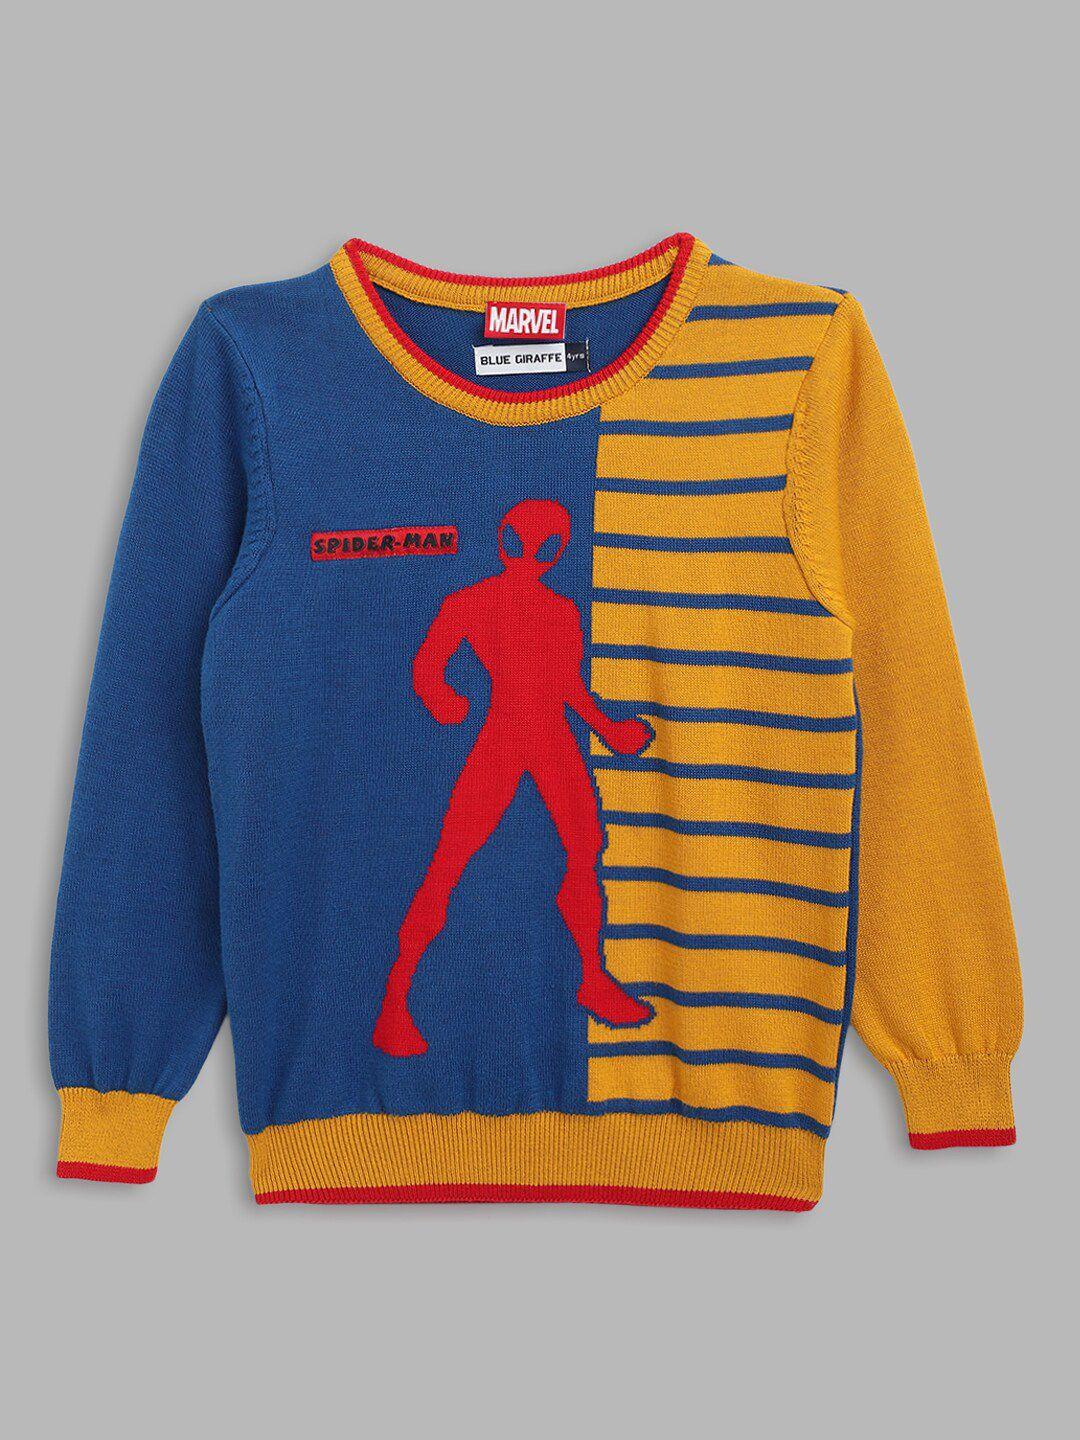 blue-giraffe-boys-blue-&-yellow-marvel-spiderman-printed-pure-cotton-sweater